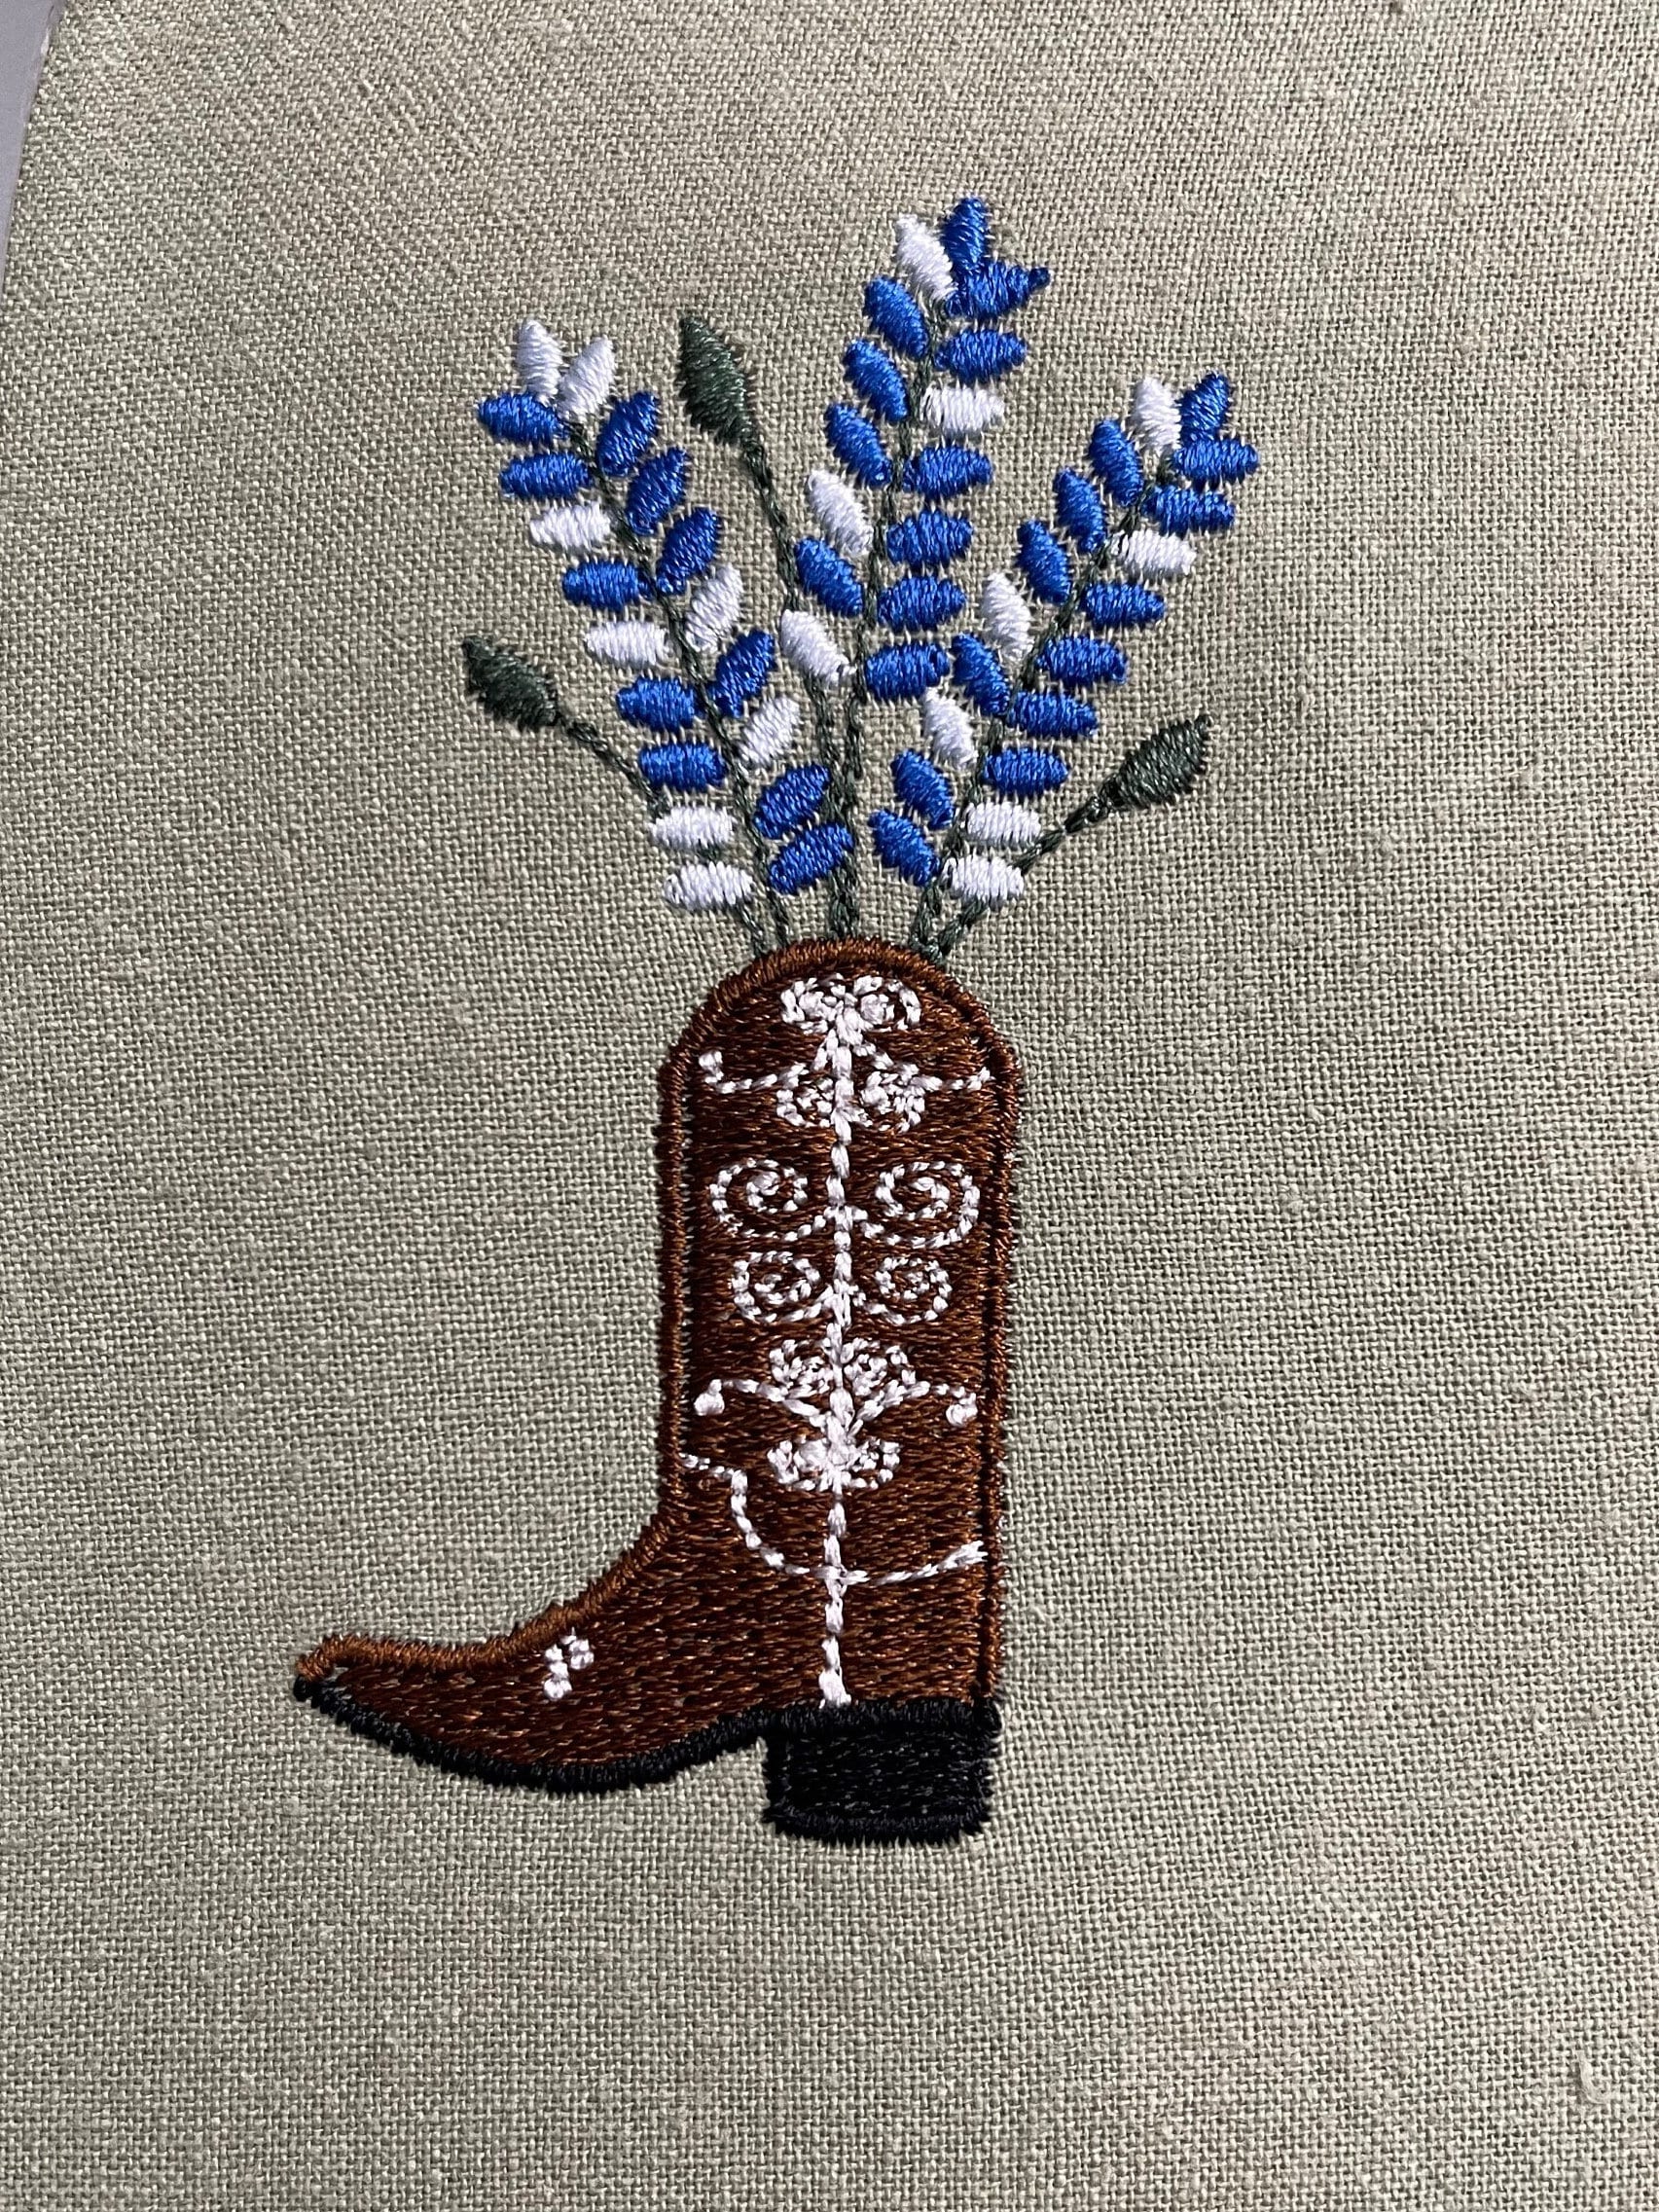 Bluebonnet Cowboy Boot Embroidery Design - Etsy